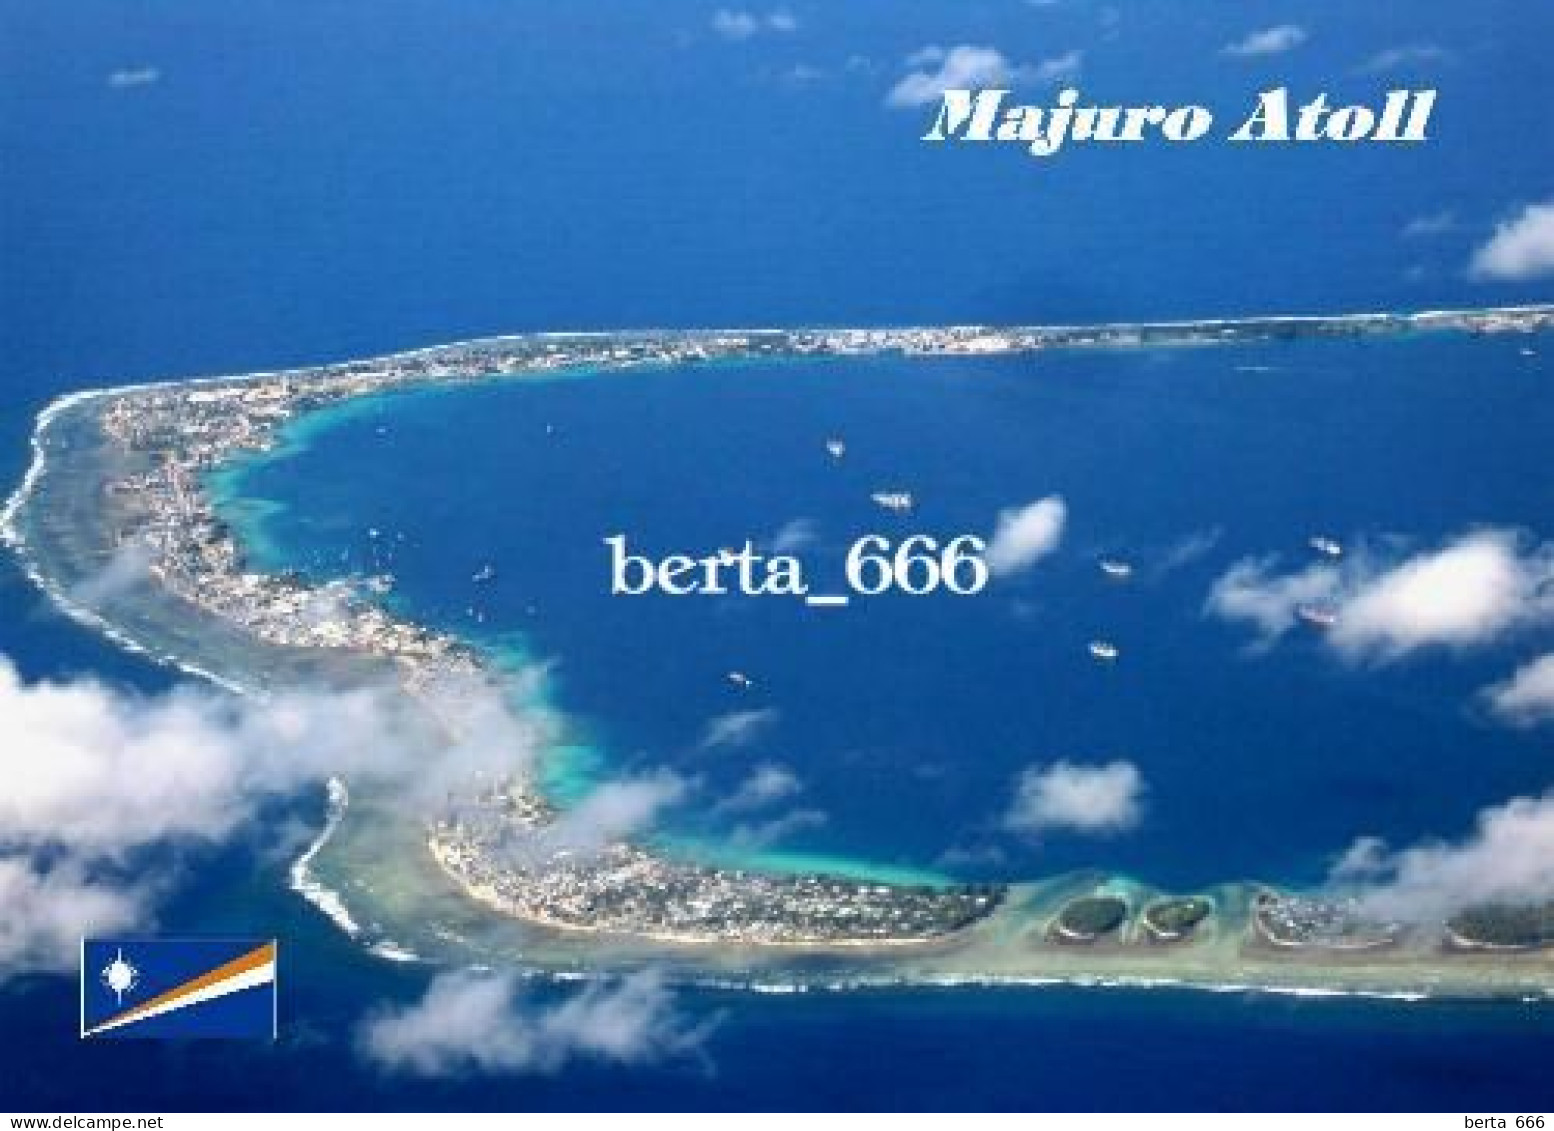 Marshall Islands Majuro Atoll Aerial View New Postcard - Marshall